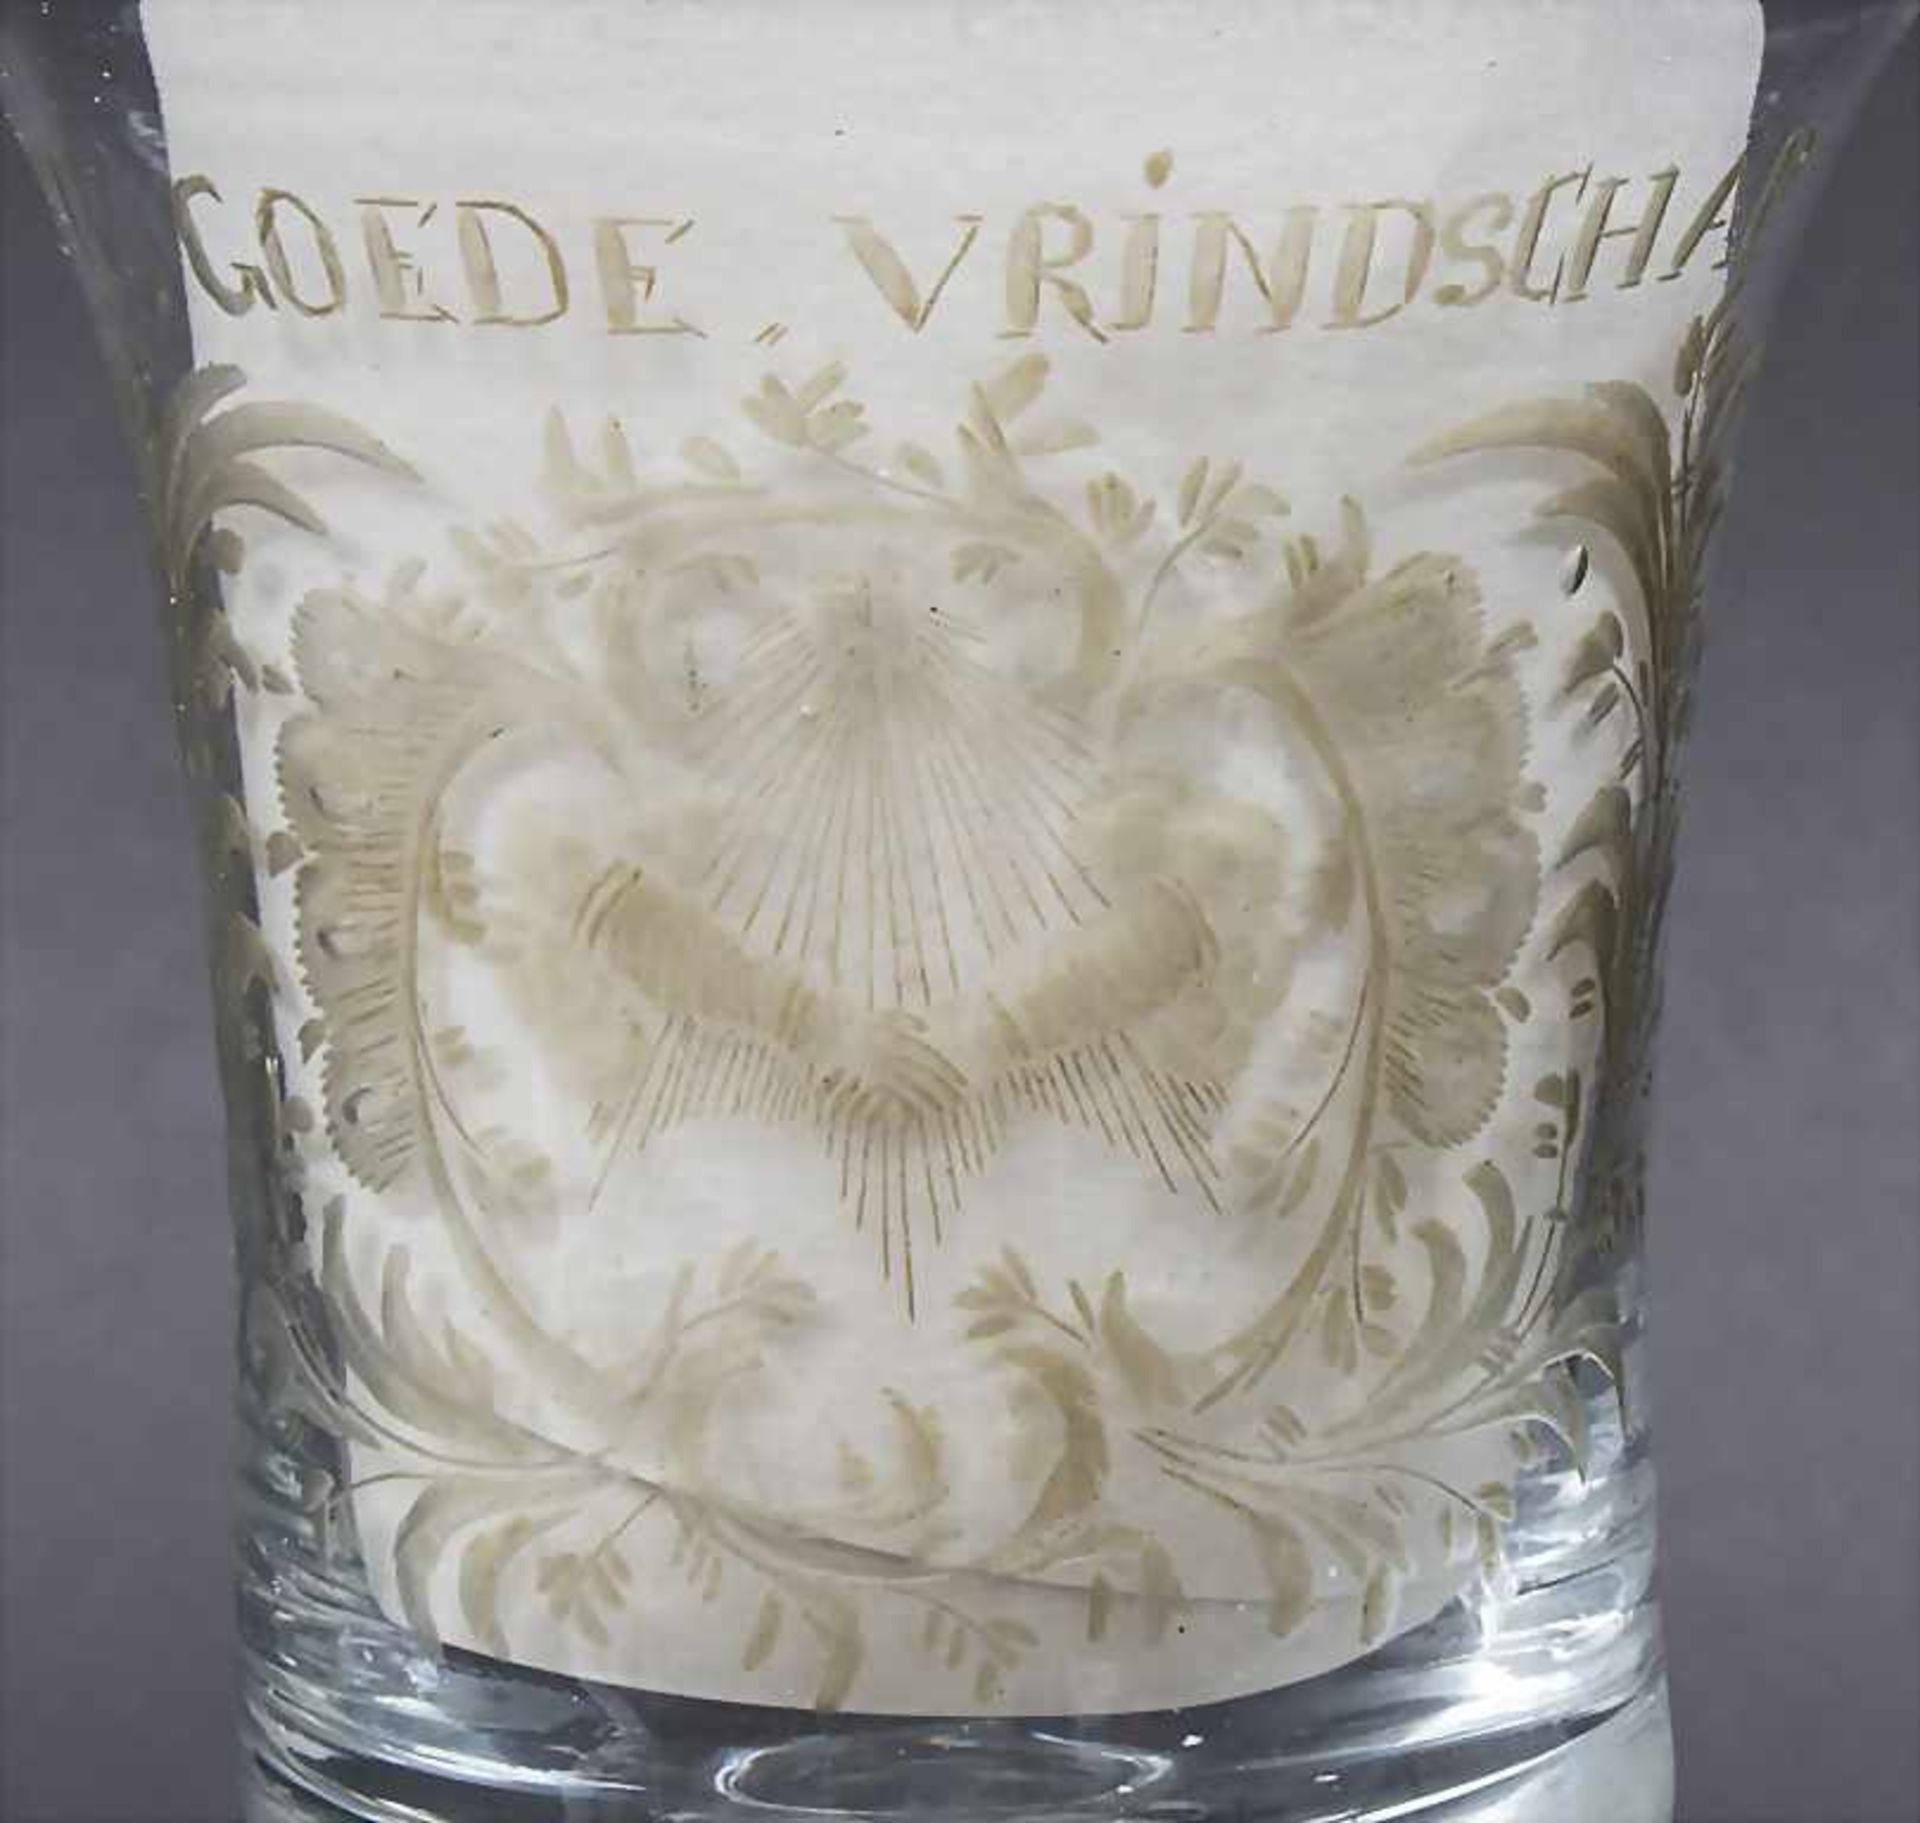 Freundschaftsglas / Noppenglas / Weinpokal / A friendship glass cup, 'DE GOEDE VRiNDSCHAP', Nied - Image 2 of 2